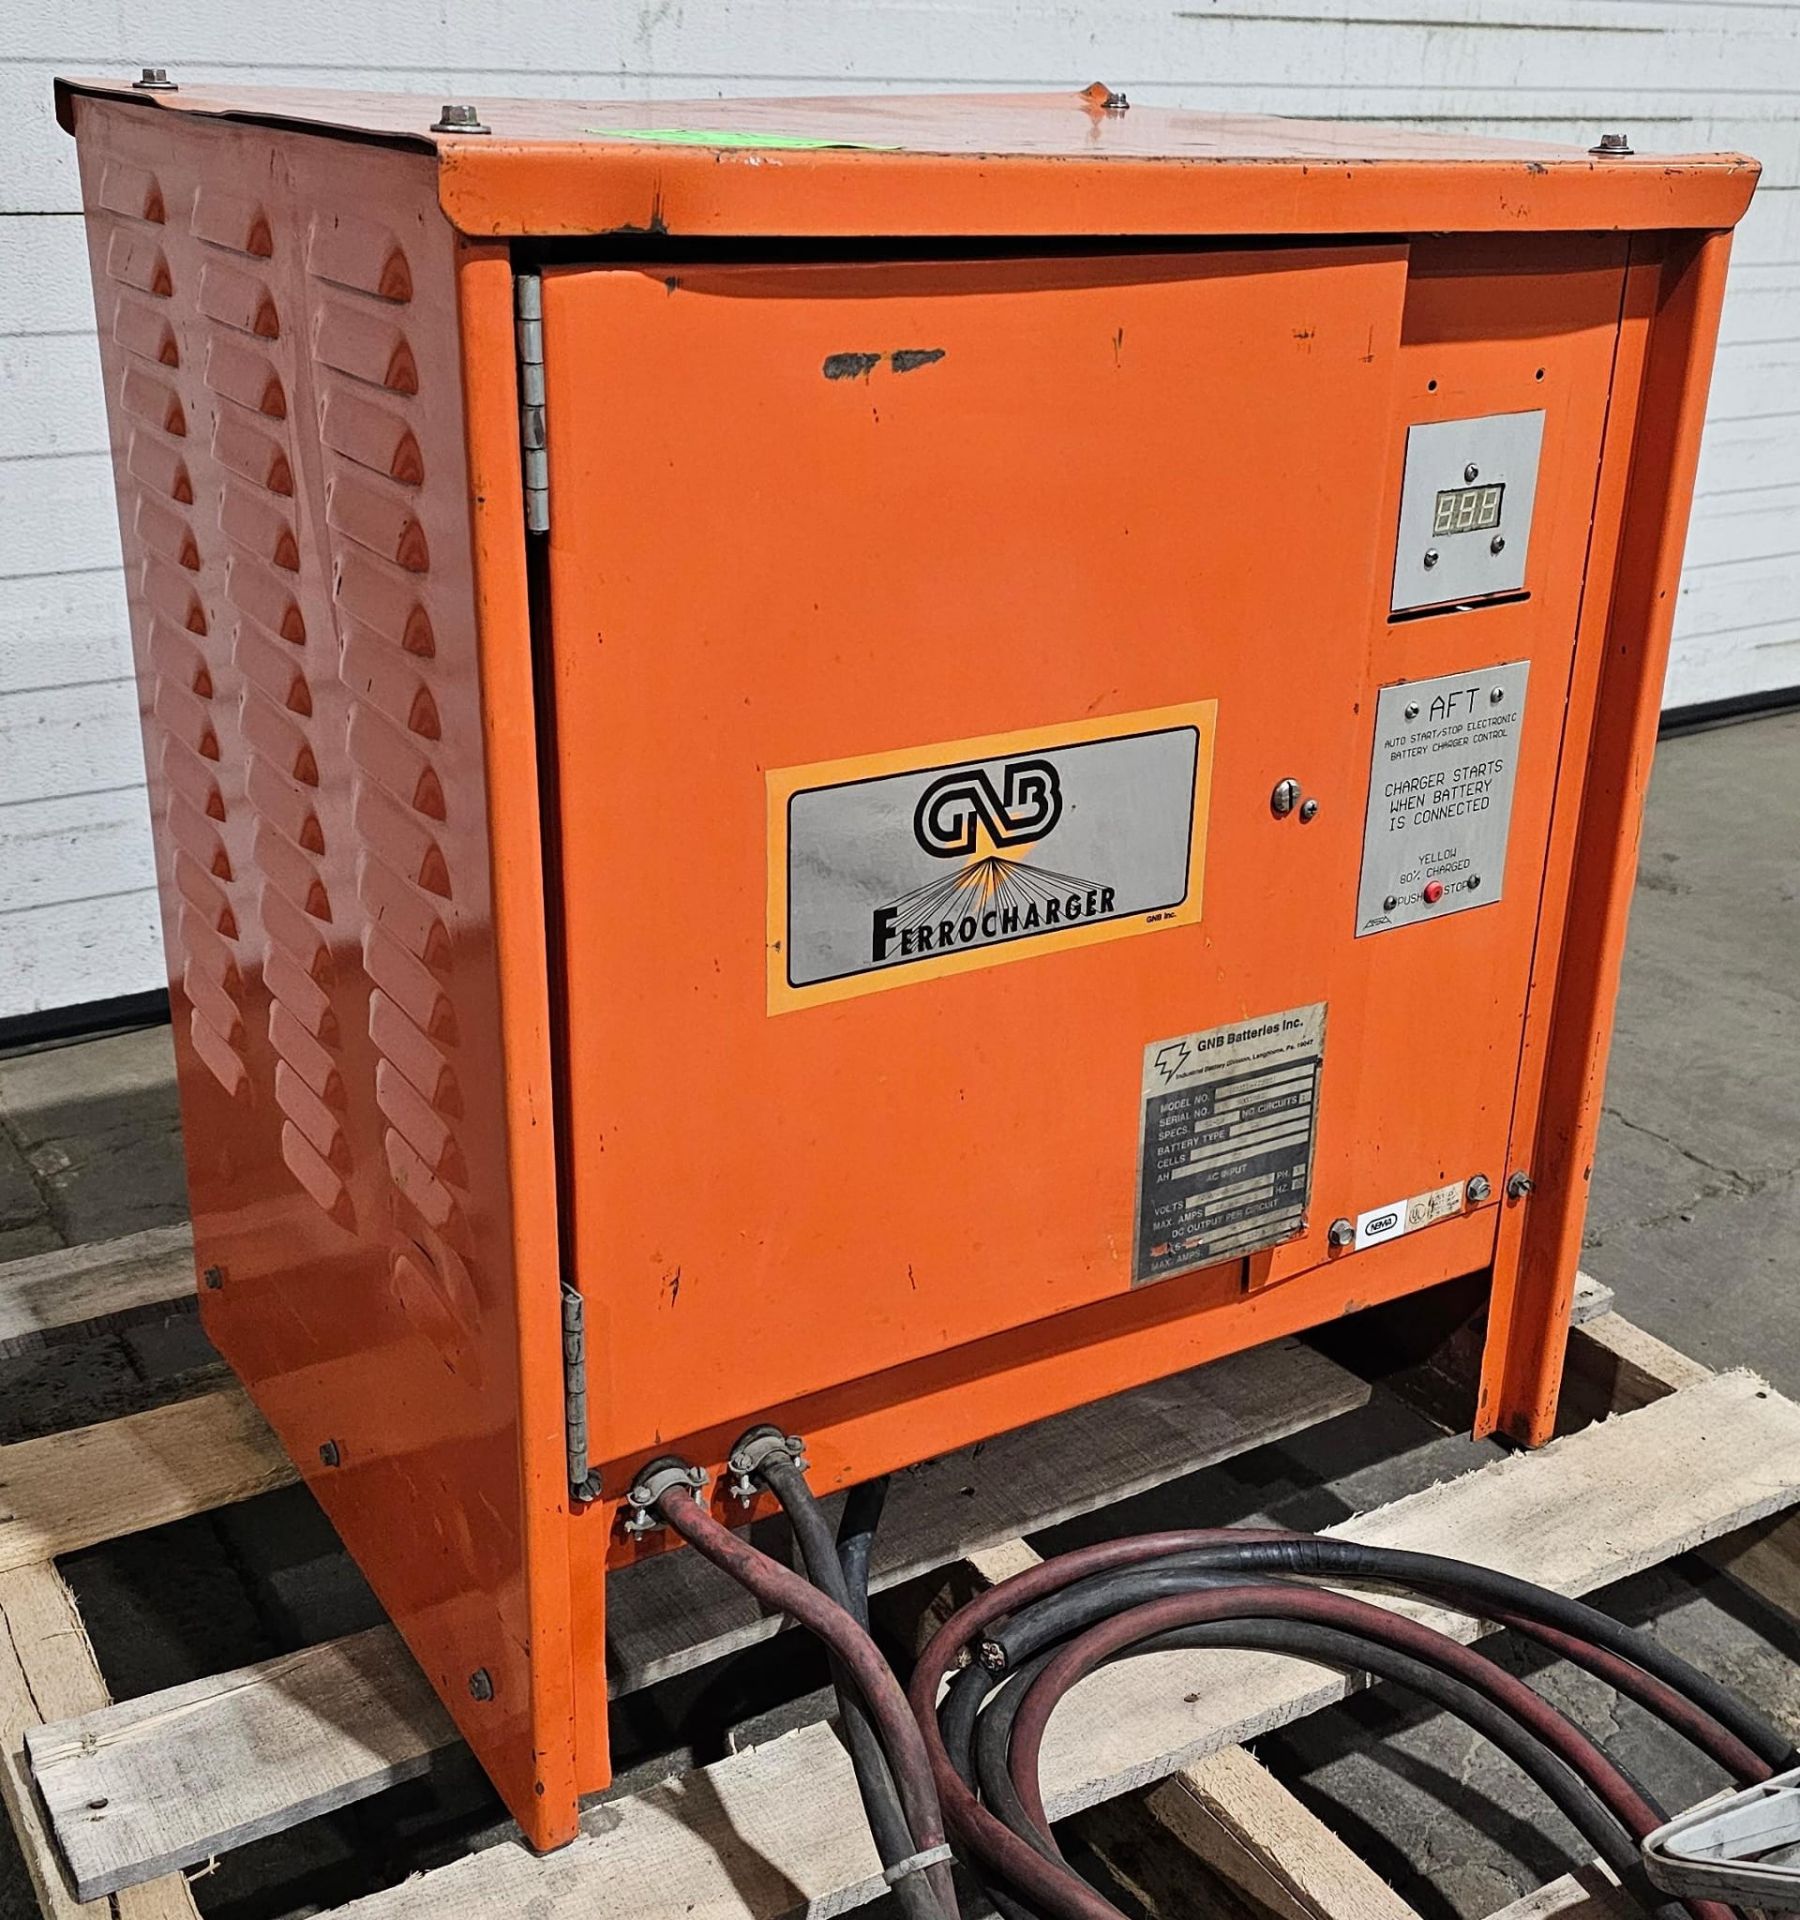 GNB Ferrocharger Forklift Battery Charger Model: gtc18-725t1 - Made in USA - 36v 3 phase 208 / 240 / - Image 3 of 3